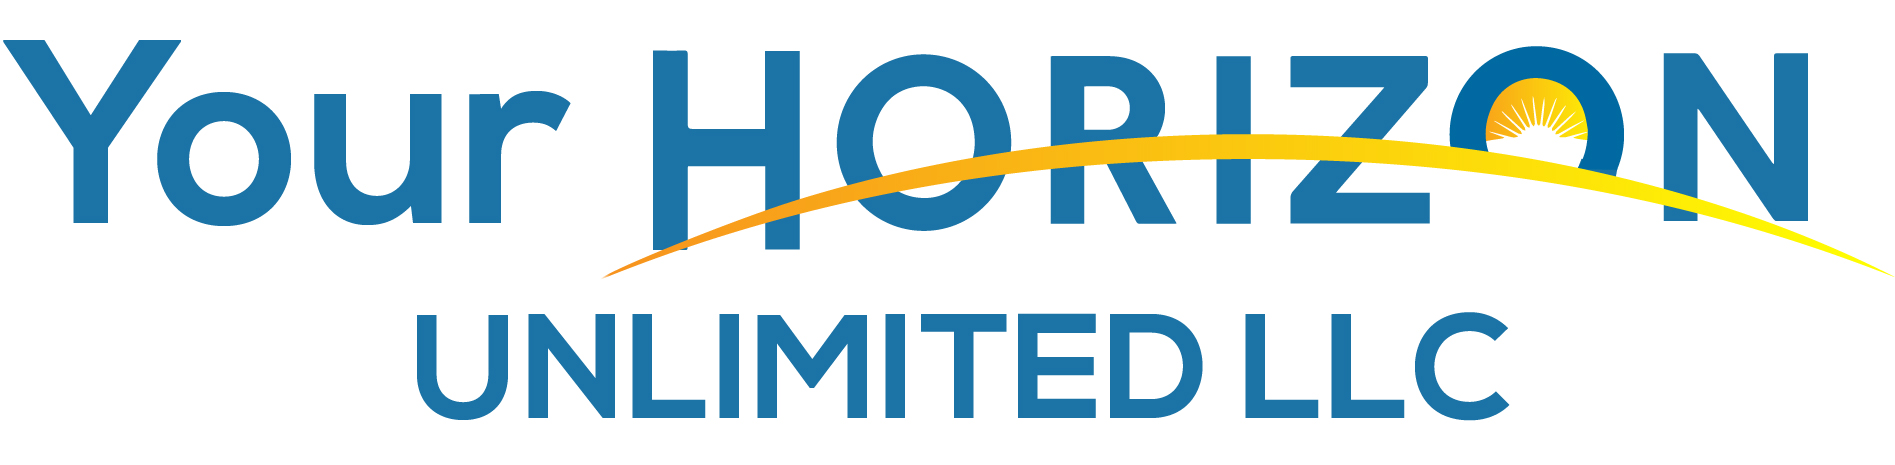 Your Horizon Unlimited LLC Logo